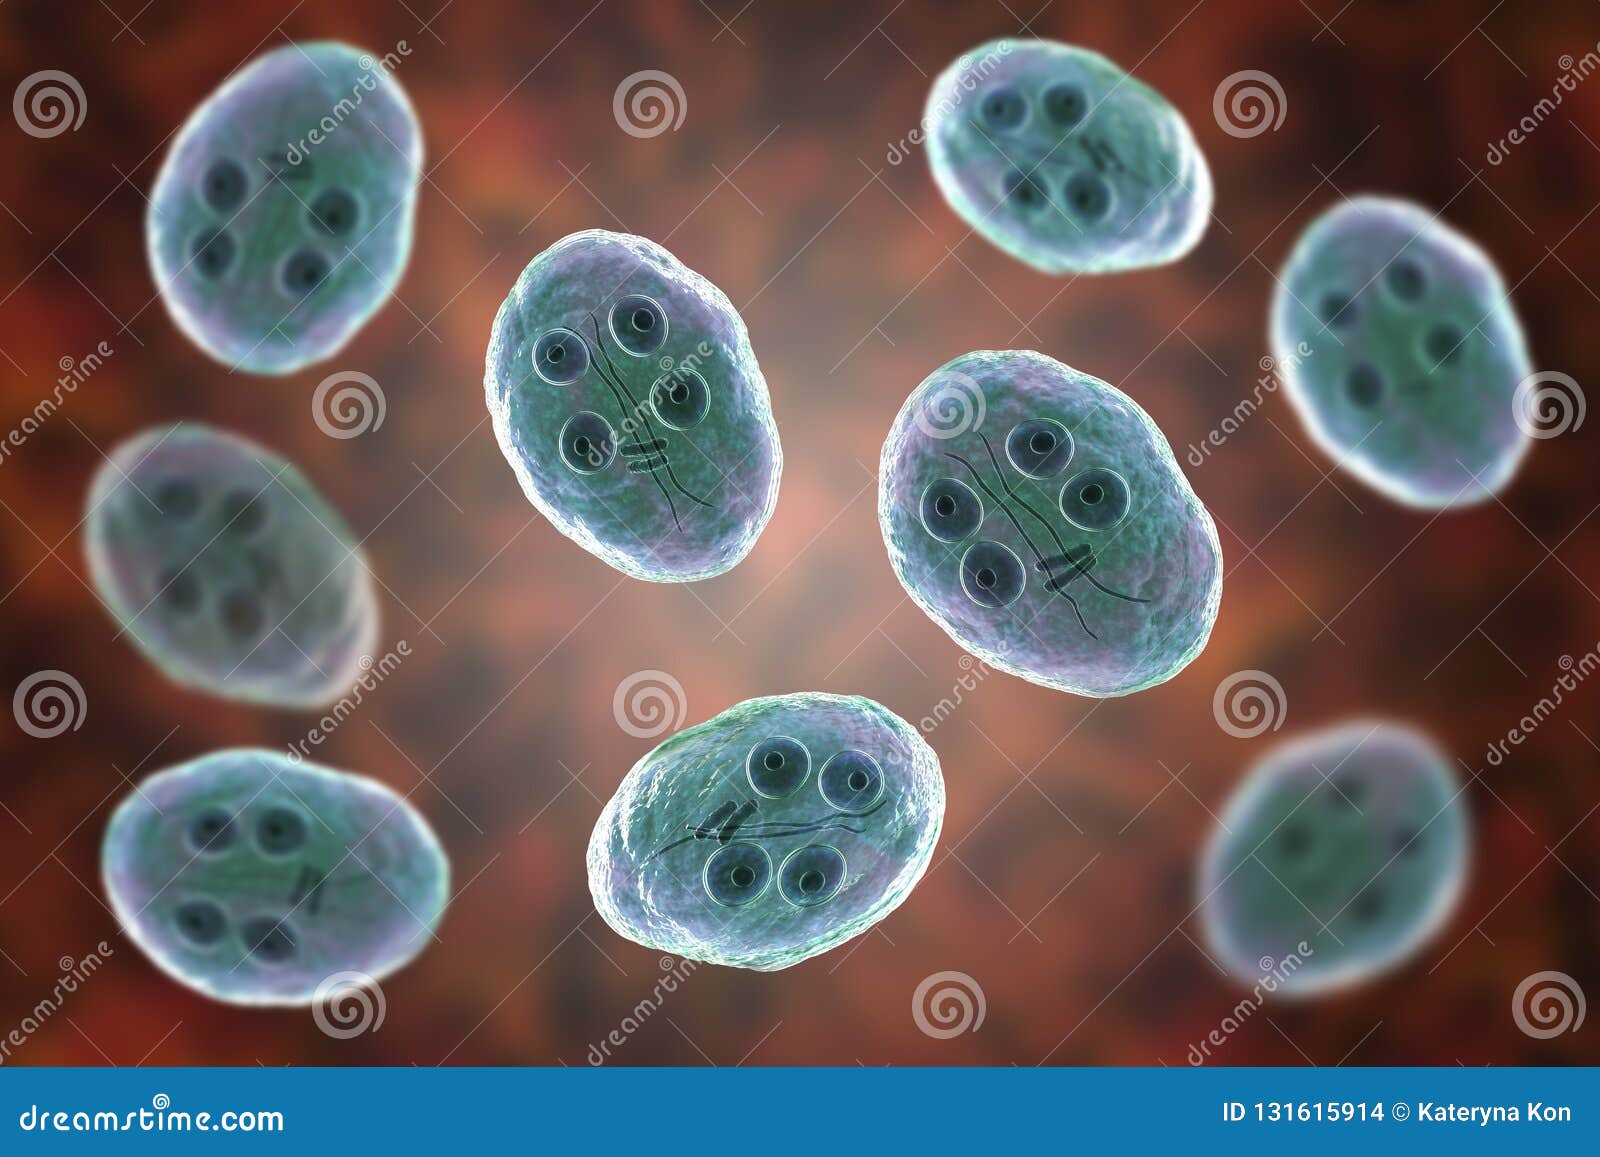 Bacterii din simptomele giardiei. Giardia – paraziti intestinali - Bacterii din simptomele giardiei